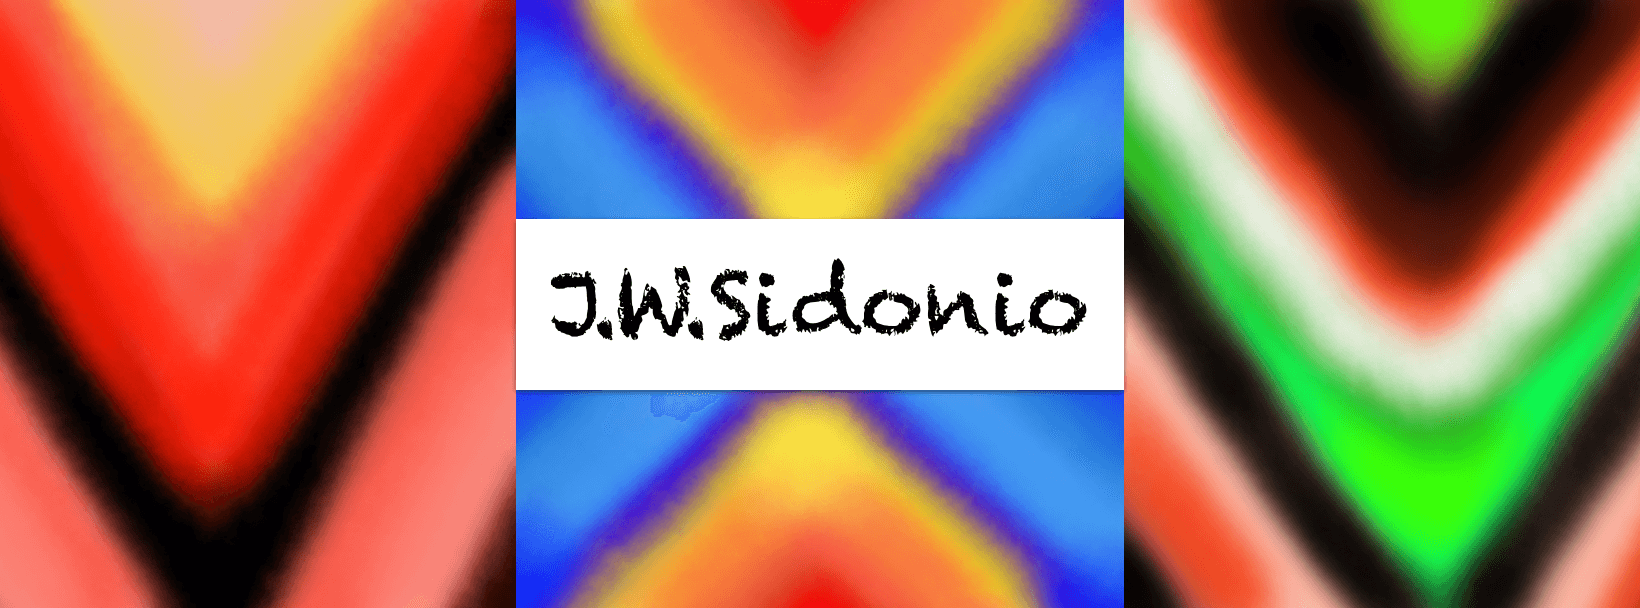 JWSidonio bannière